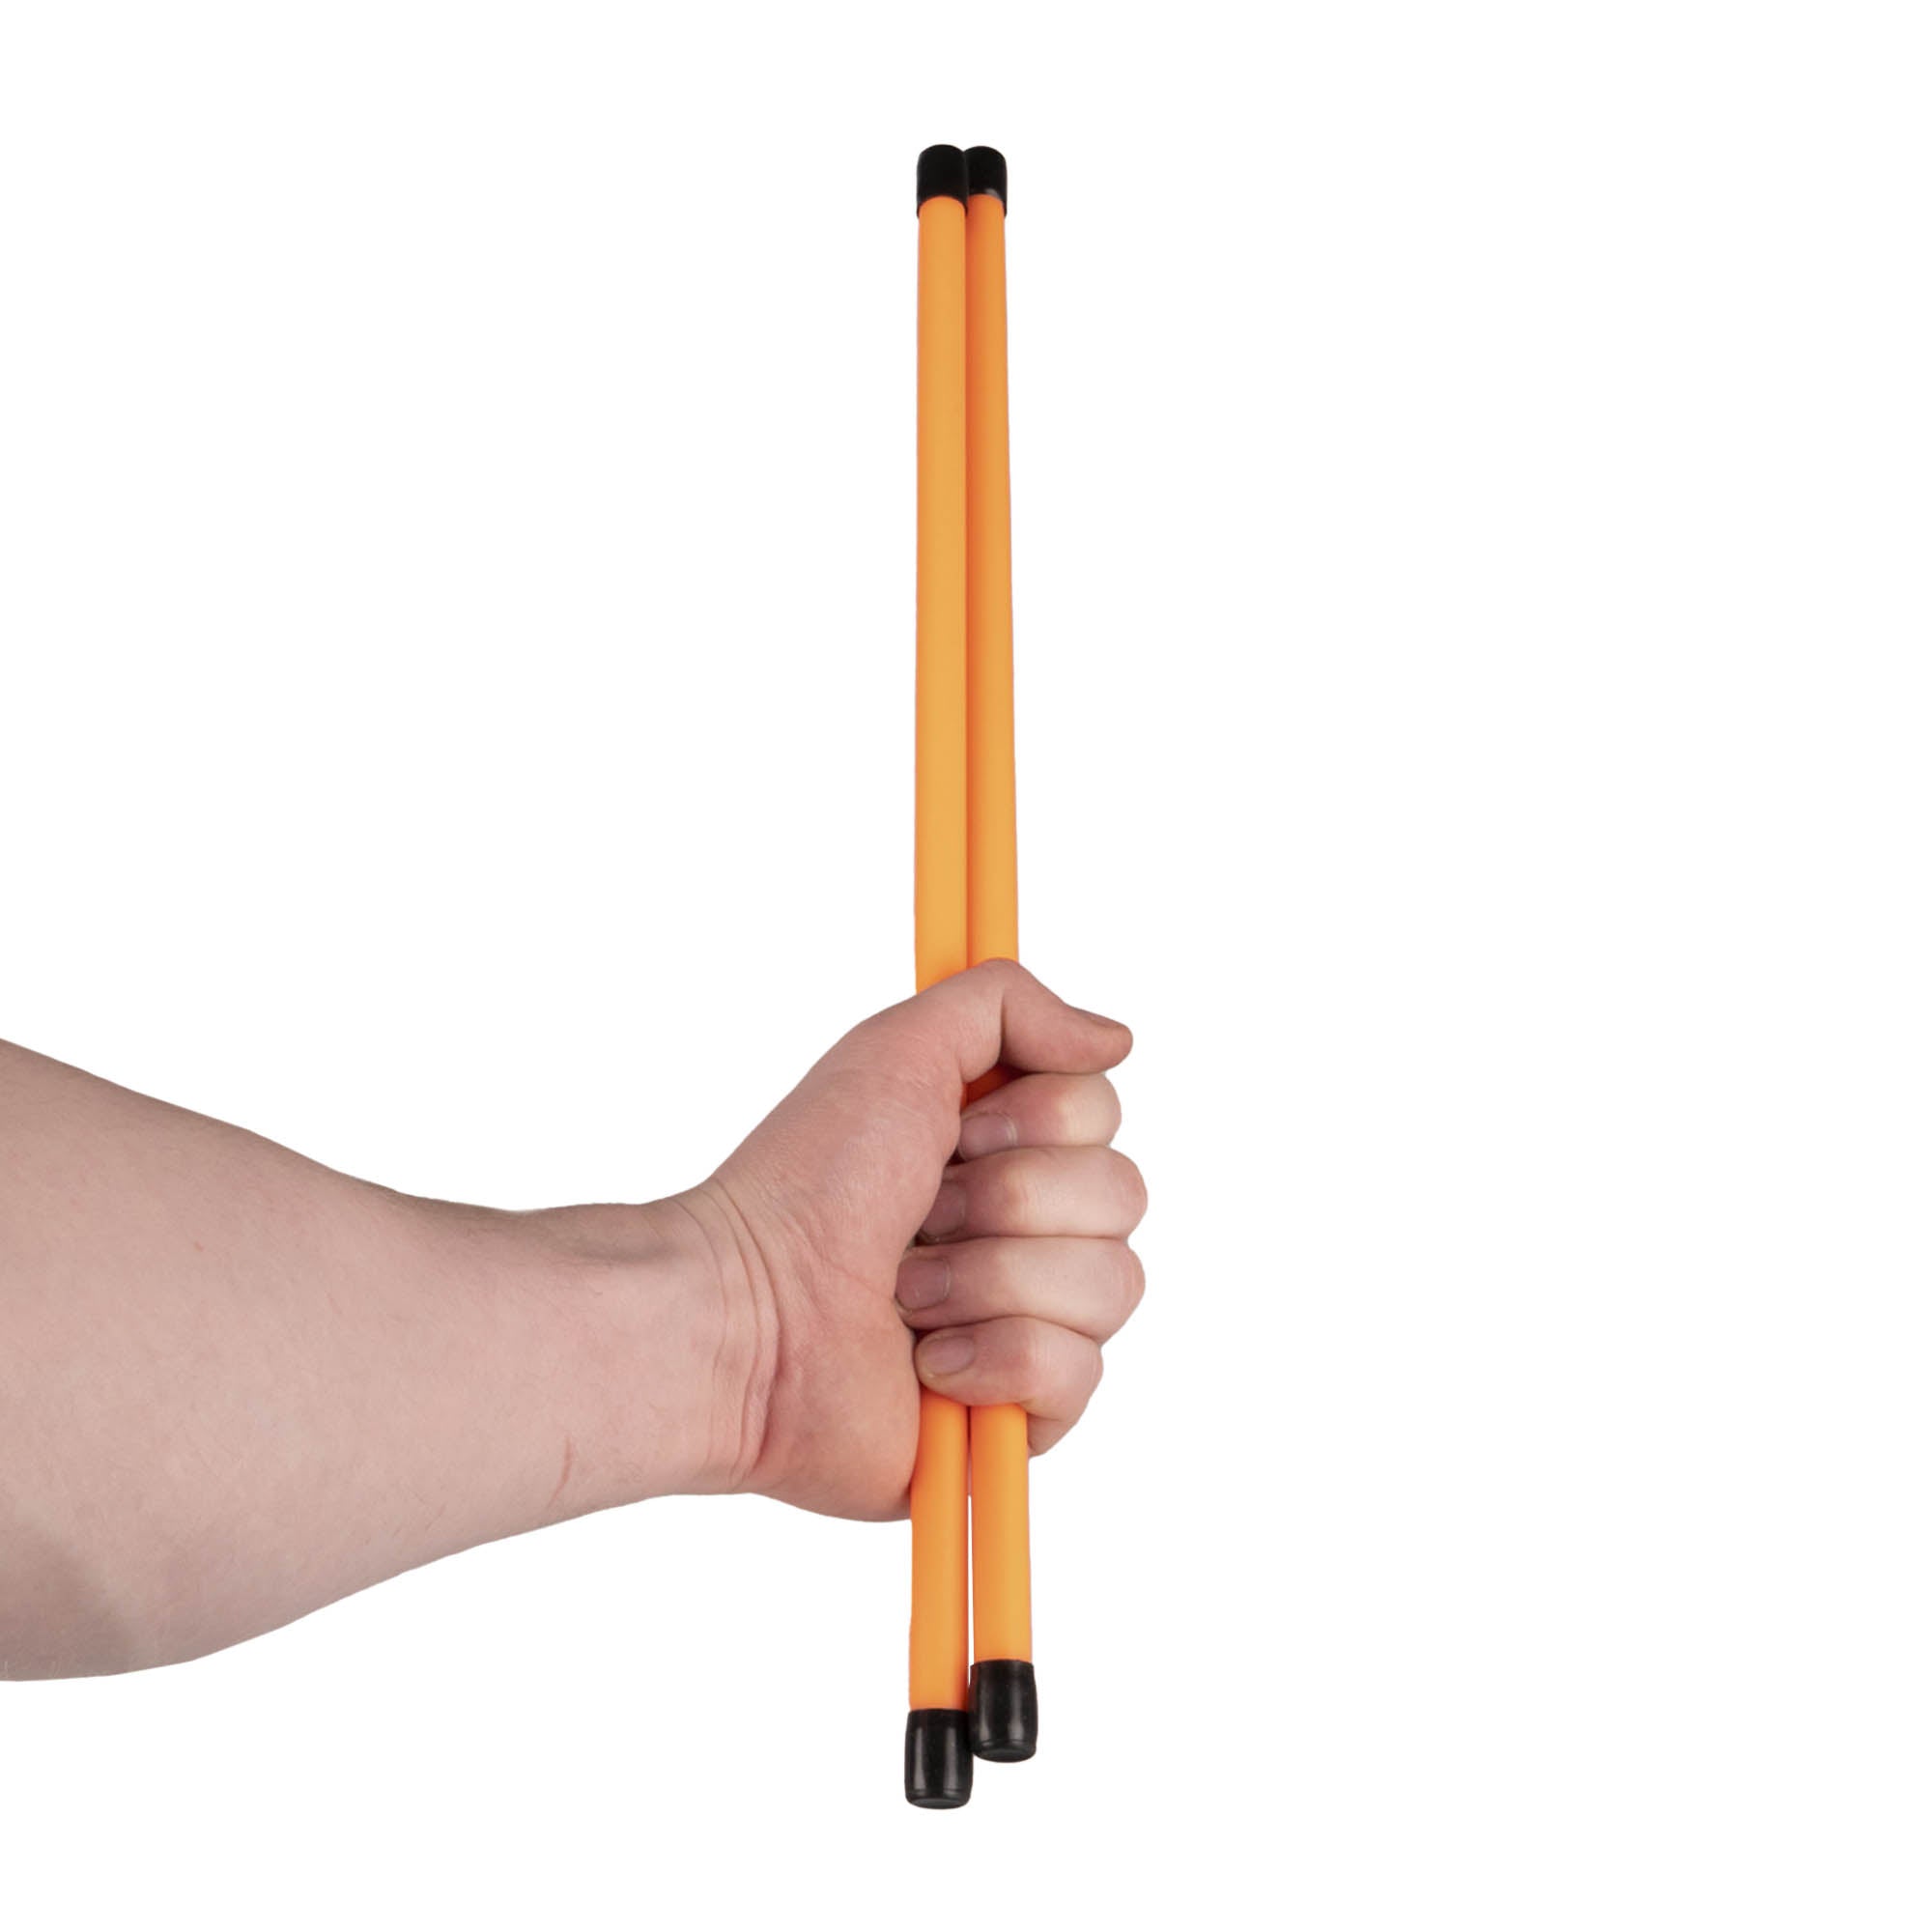 Pair of orange devilstick handsticks in hand